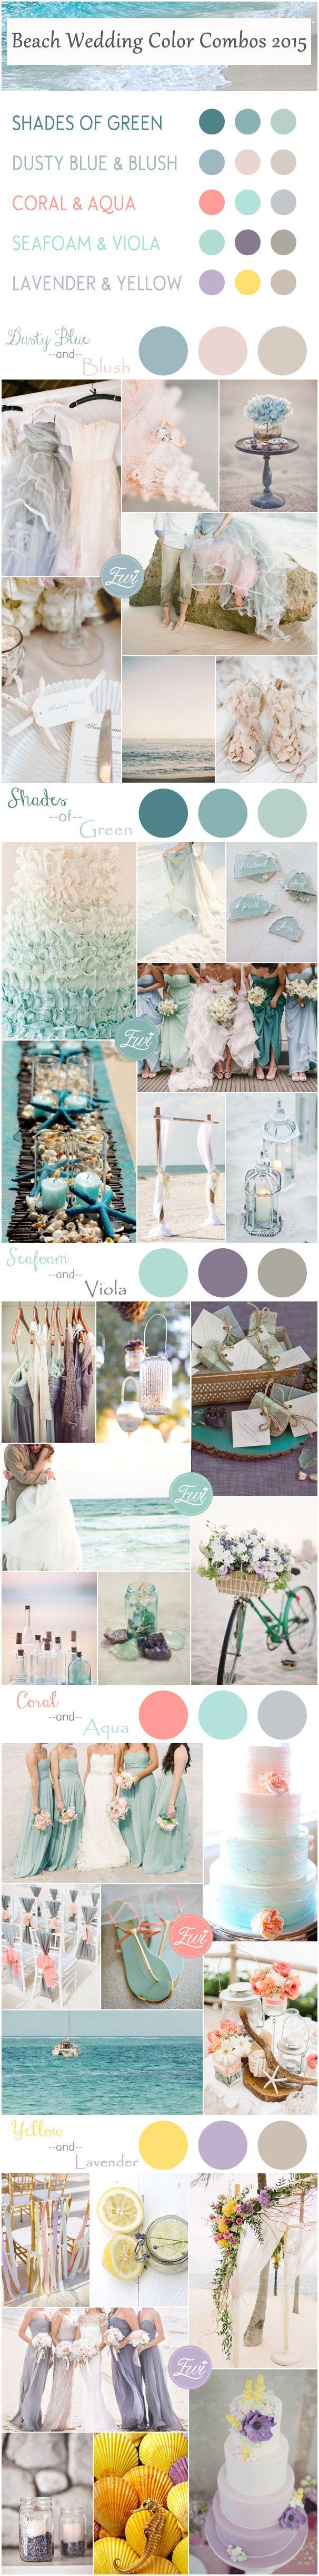 زفاف - Top 5 Beach Wedding Color Ideas For Summer 2015